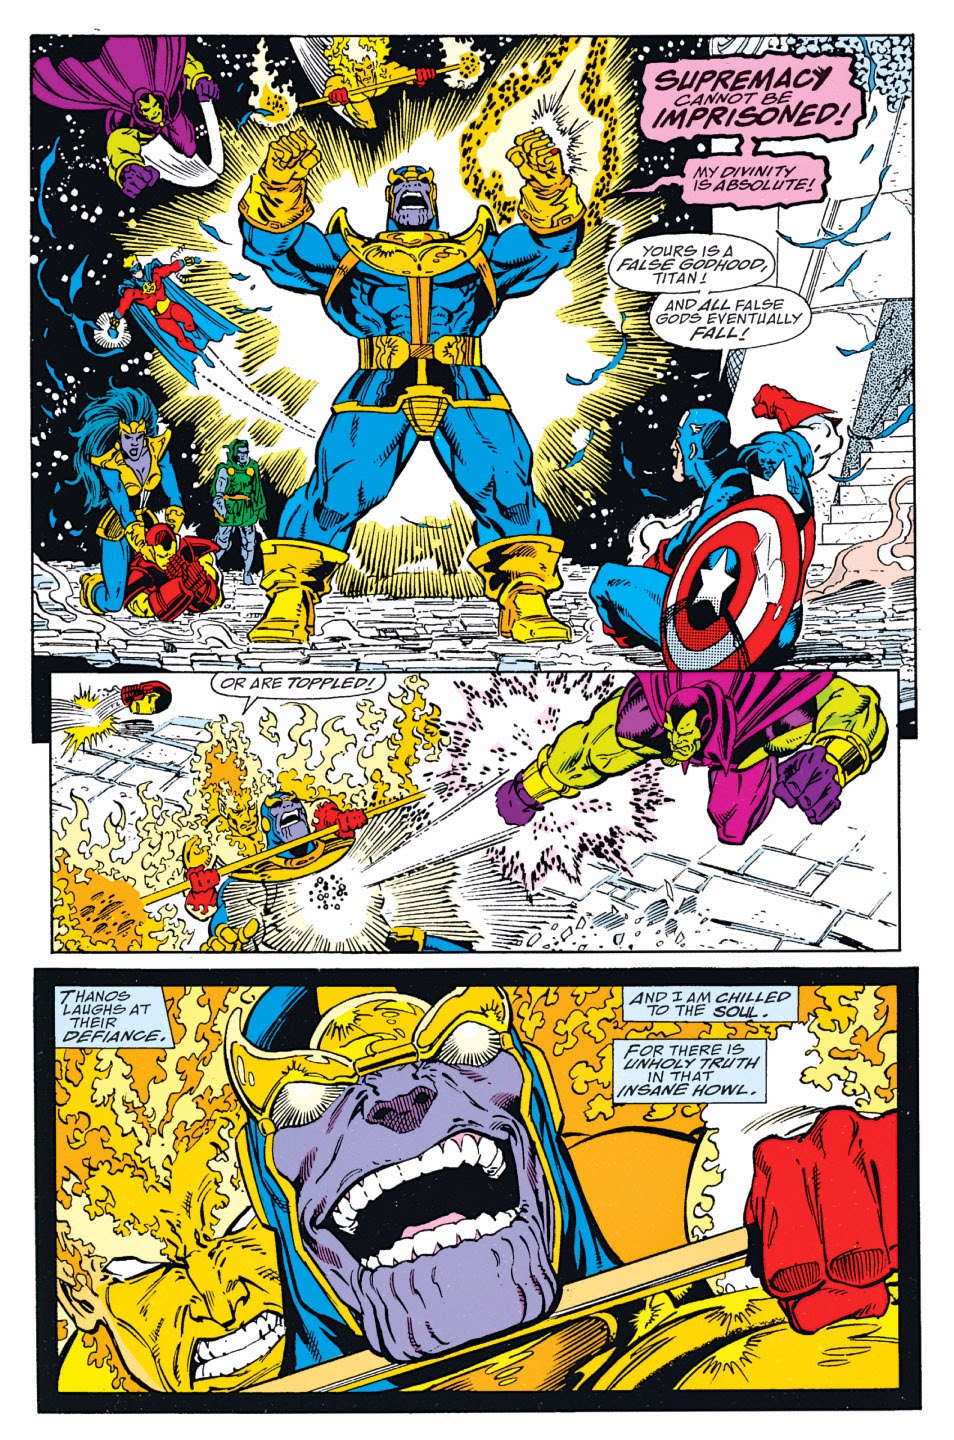 Infinity Gauntlet V1 04 Of 06 1991 Viewcomic Reading Comics Online For Free 2019 - sinrobloxheroes online 4 รวว ถงมอ infinity gauntlet